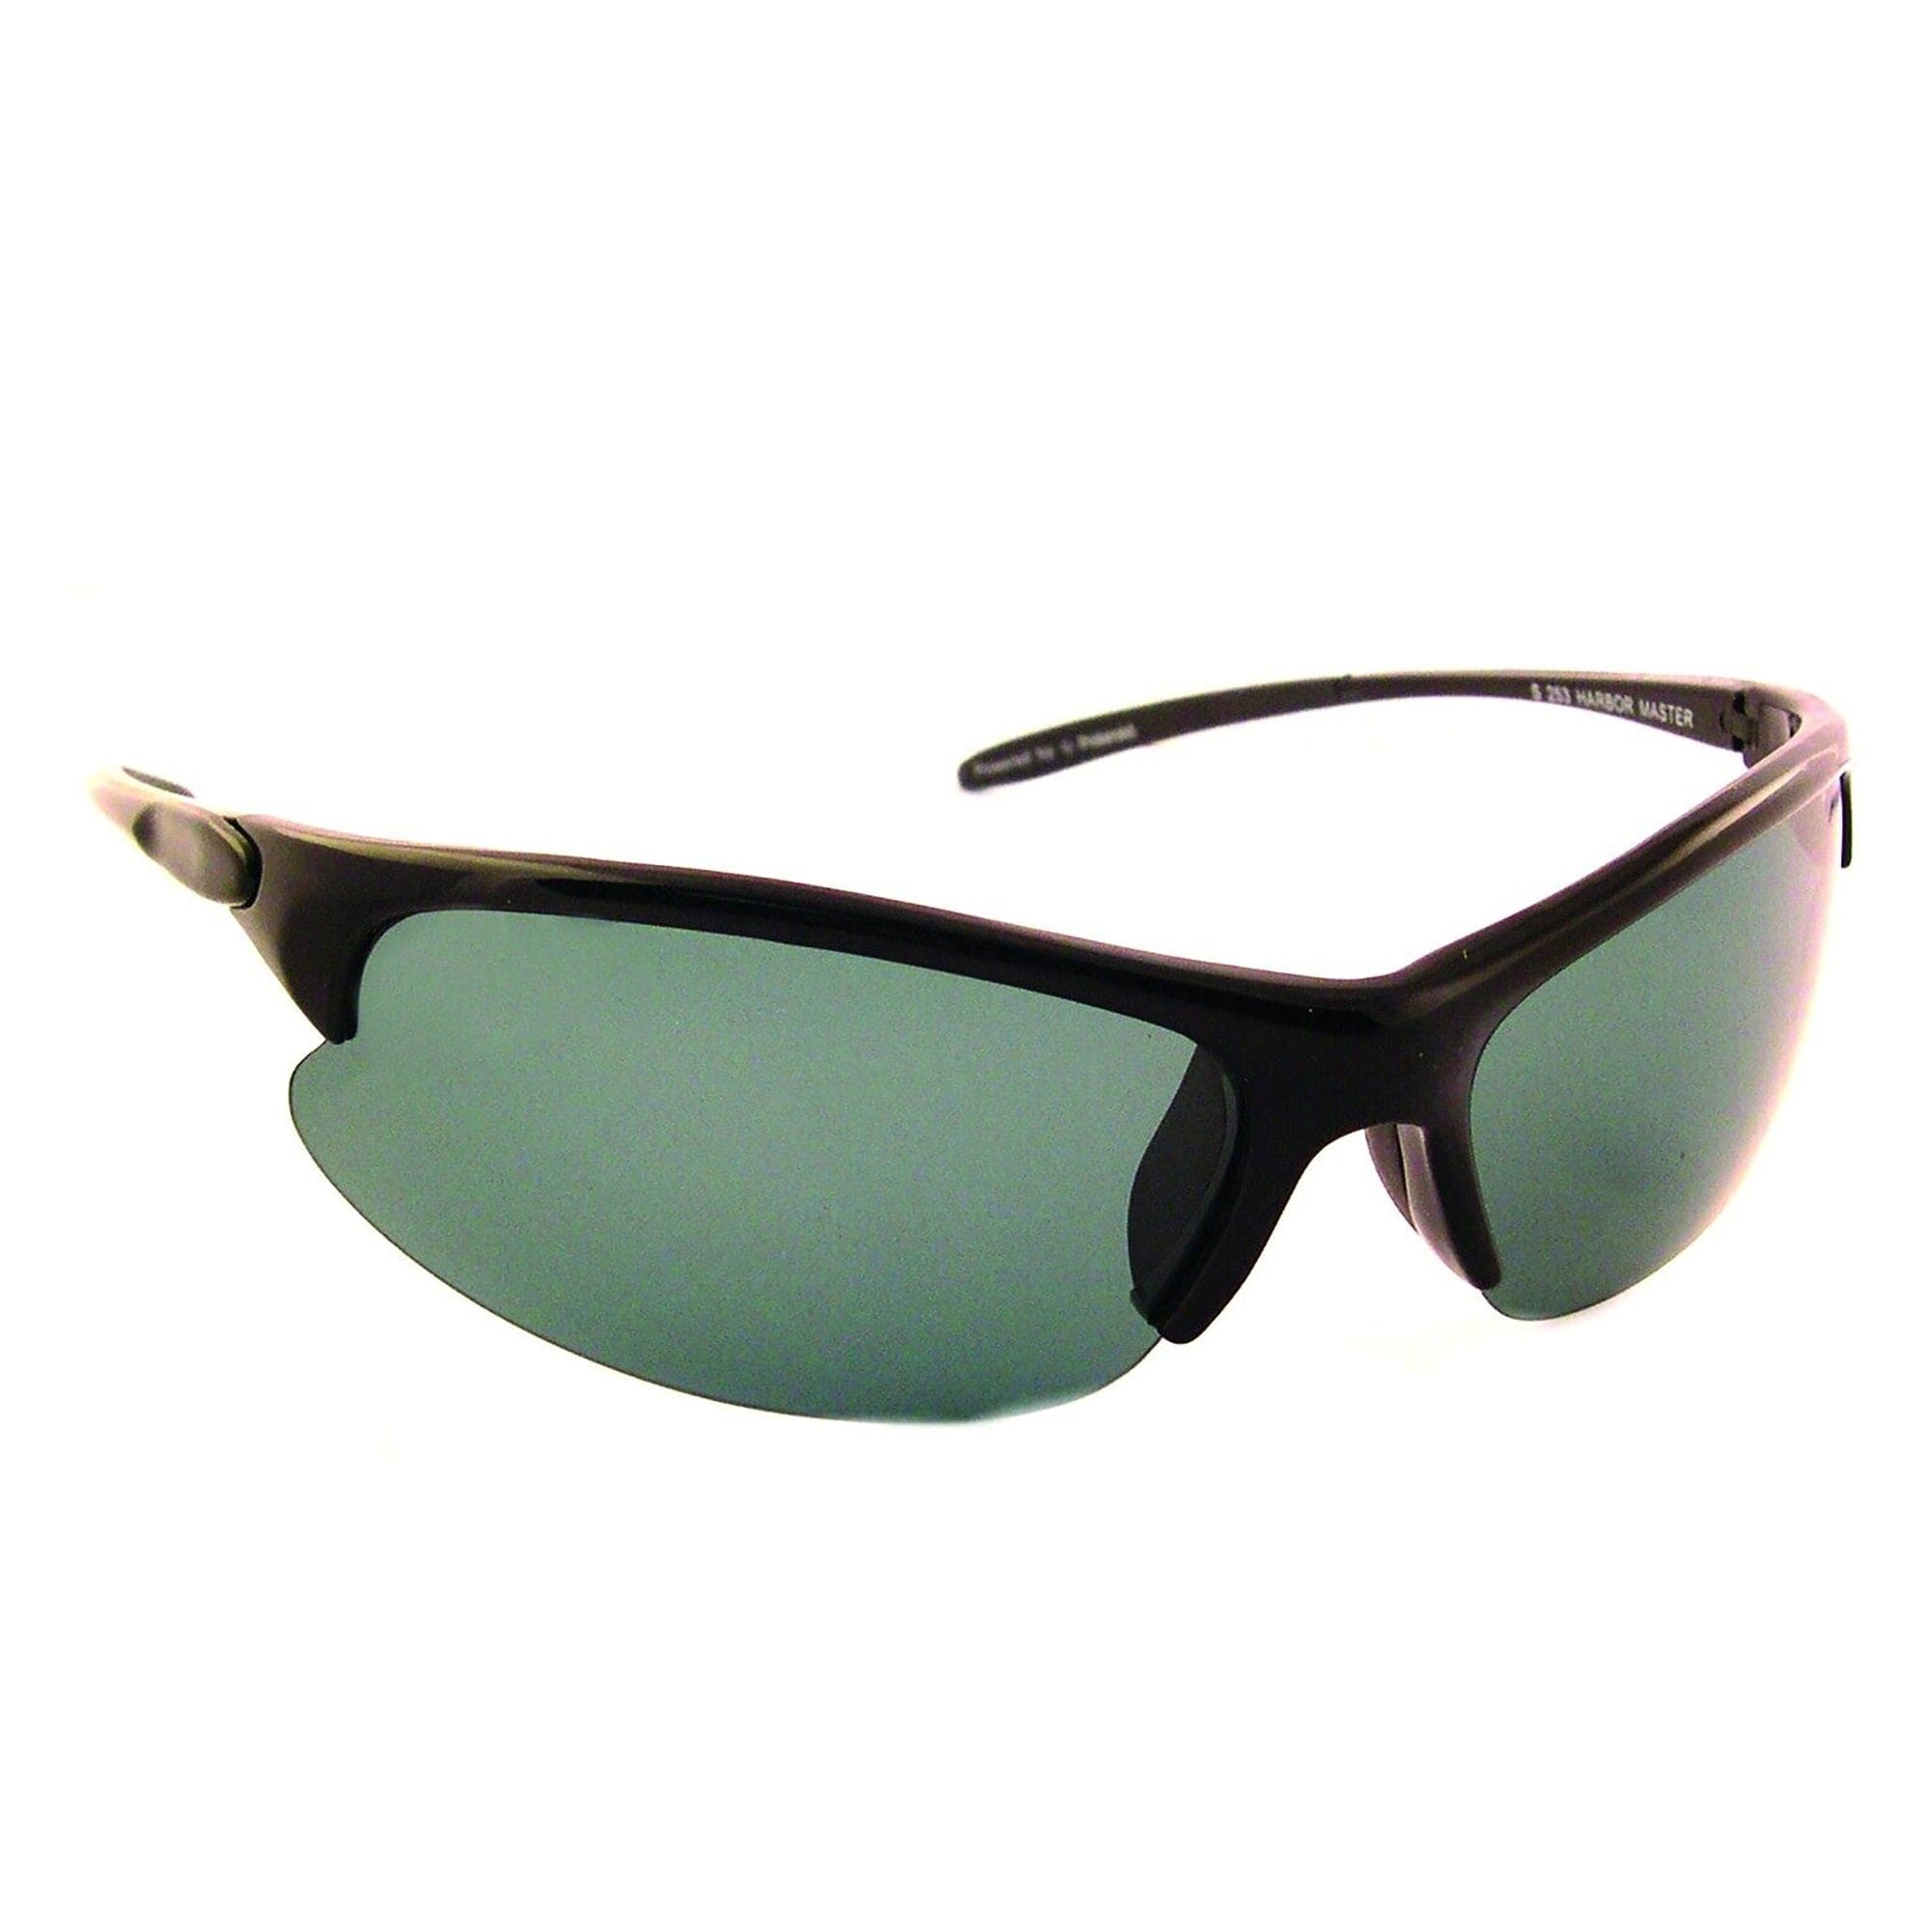 Sunglasses Black Frame / Grey Lens Polarized 10mm Sea Striker Harbor M